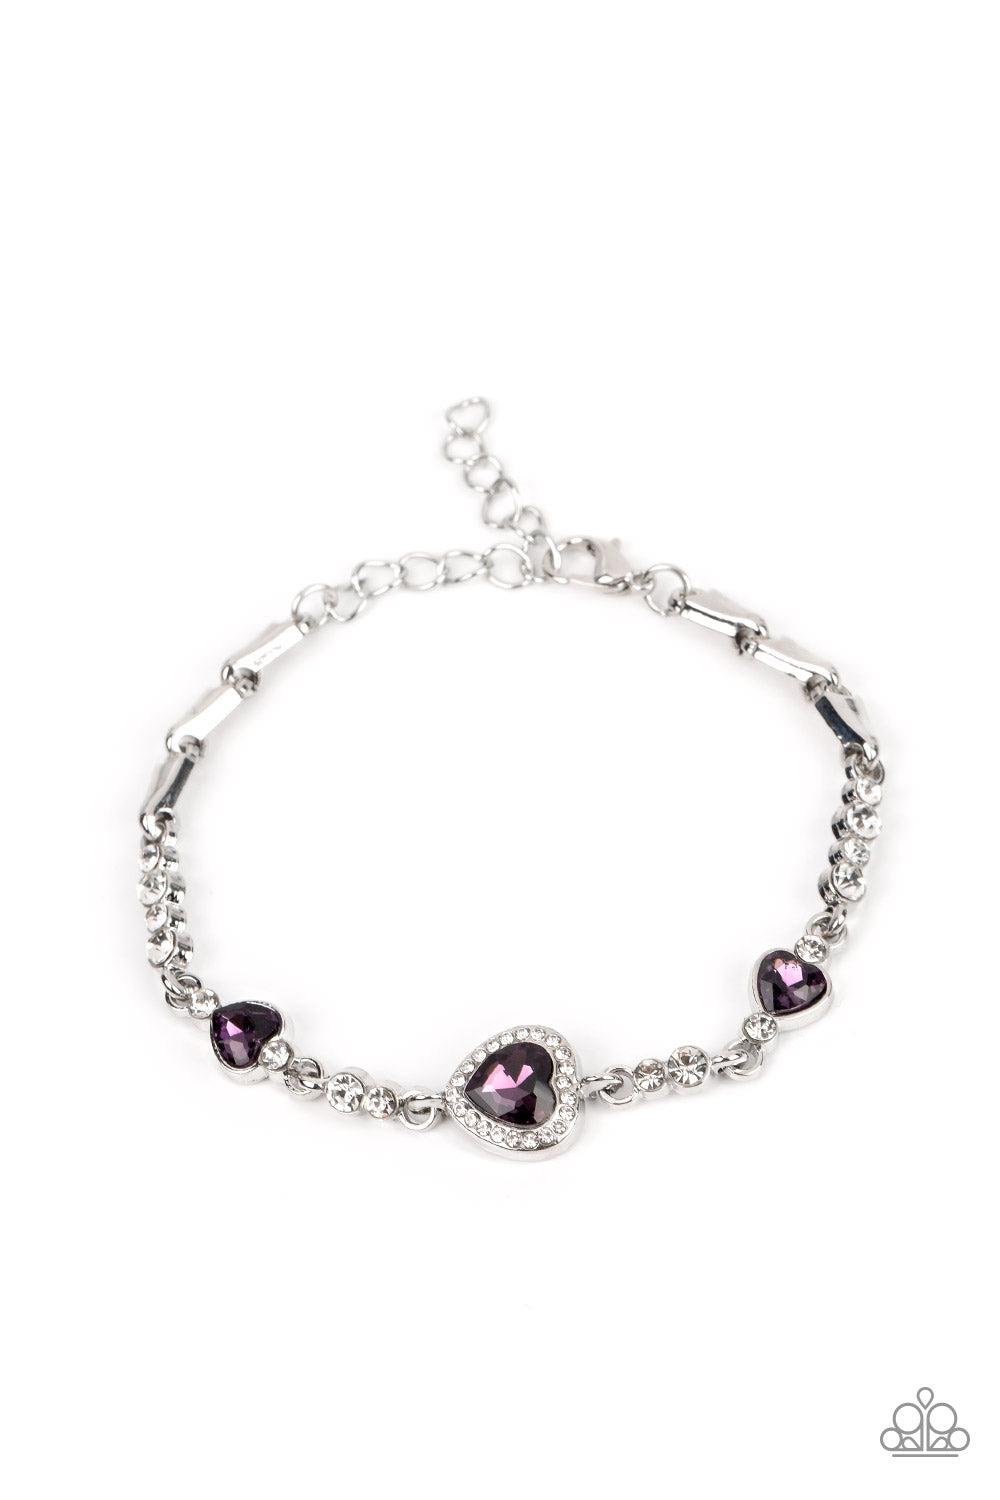 Amor Actually Purple Rhinestone Heart Bracelet - Paparazzi Accessories- lightbox - CarasShop.com - $5 Jewelry by Cara Jewels